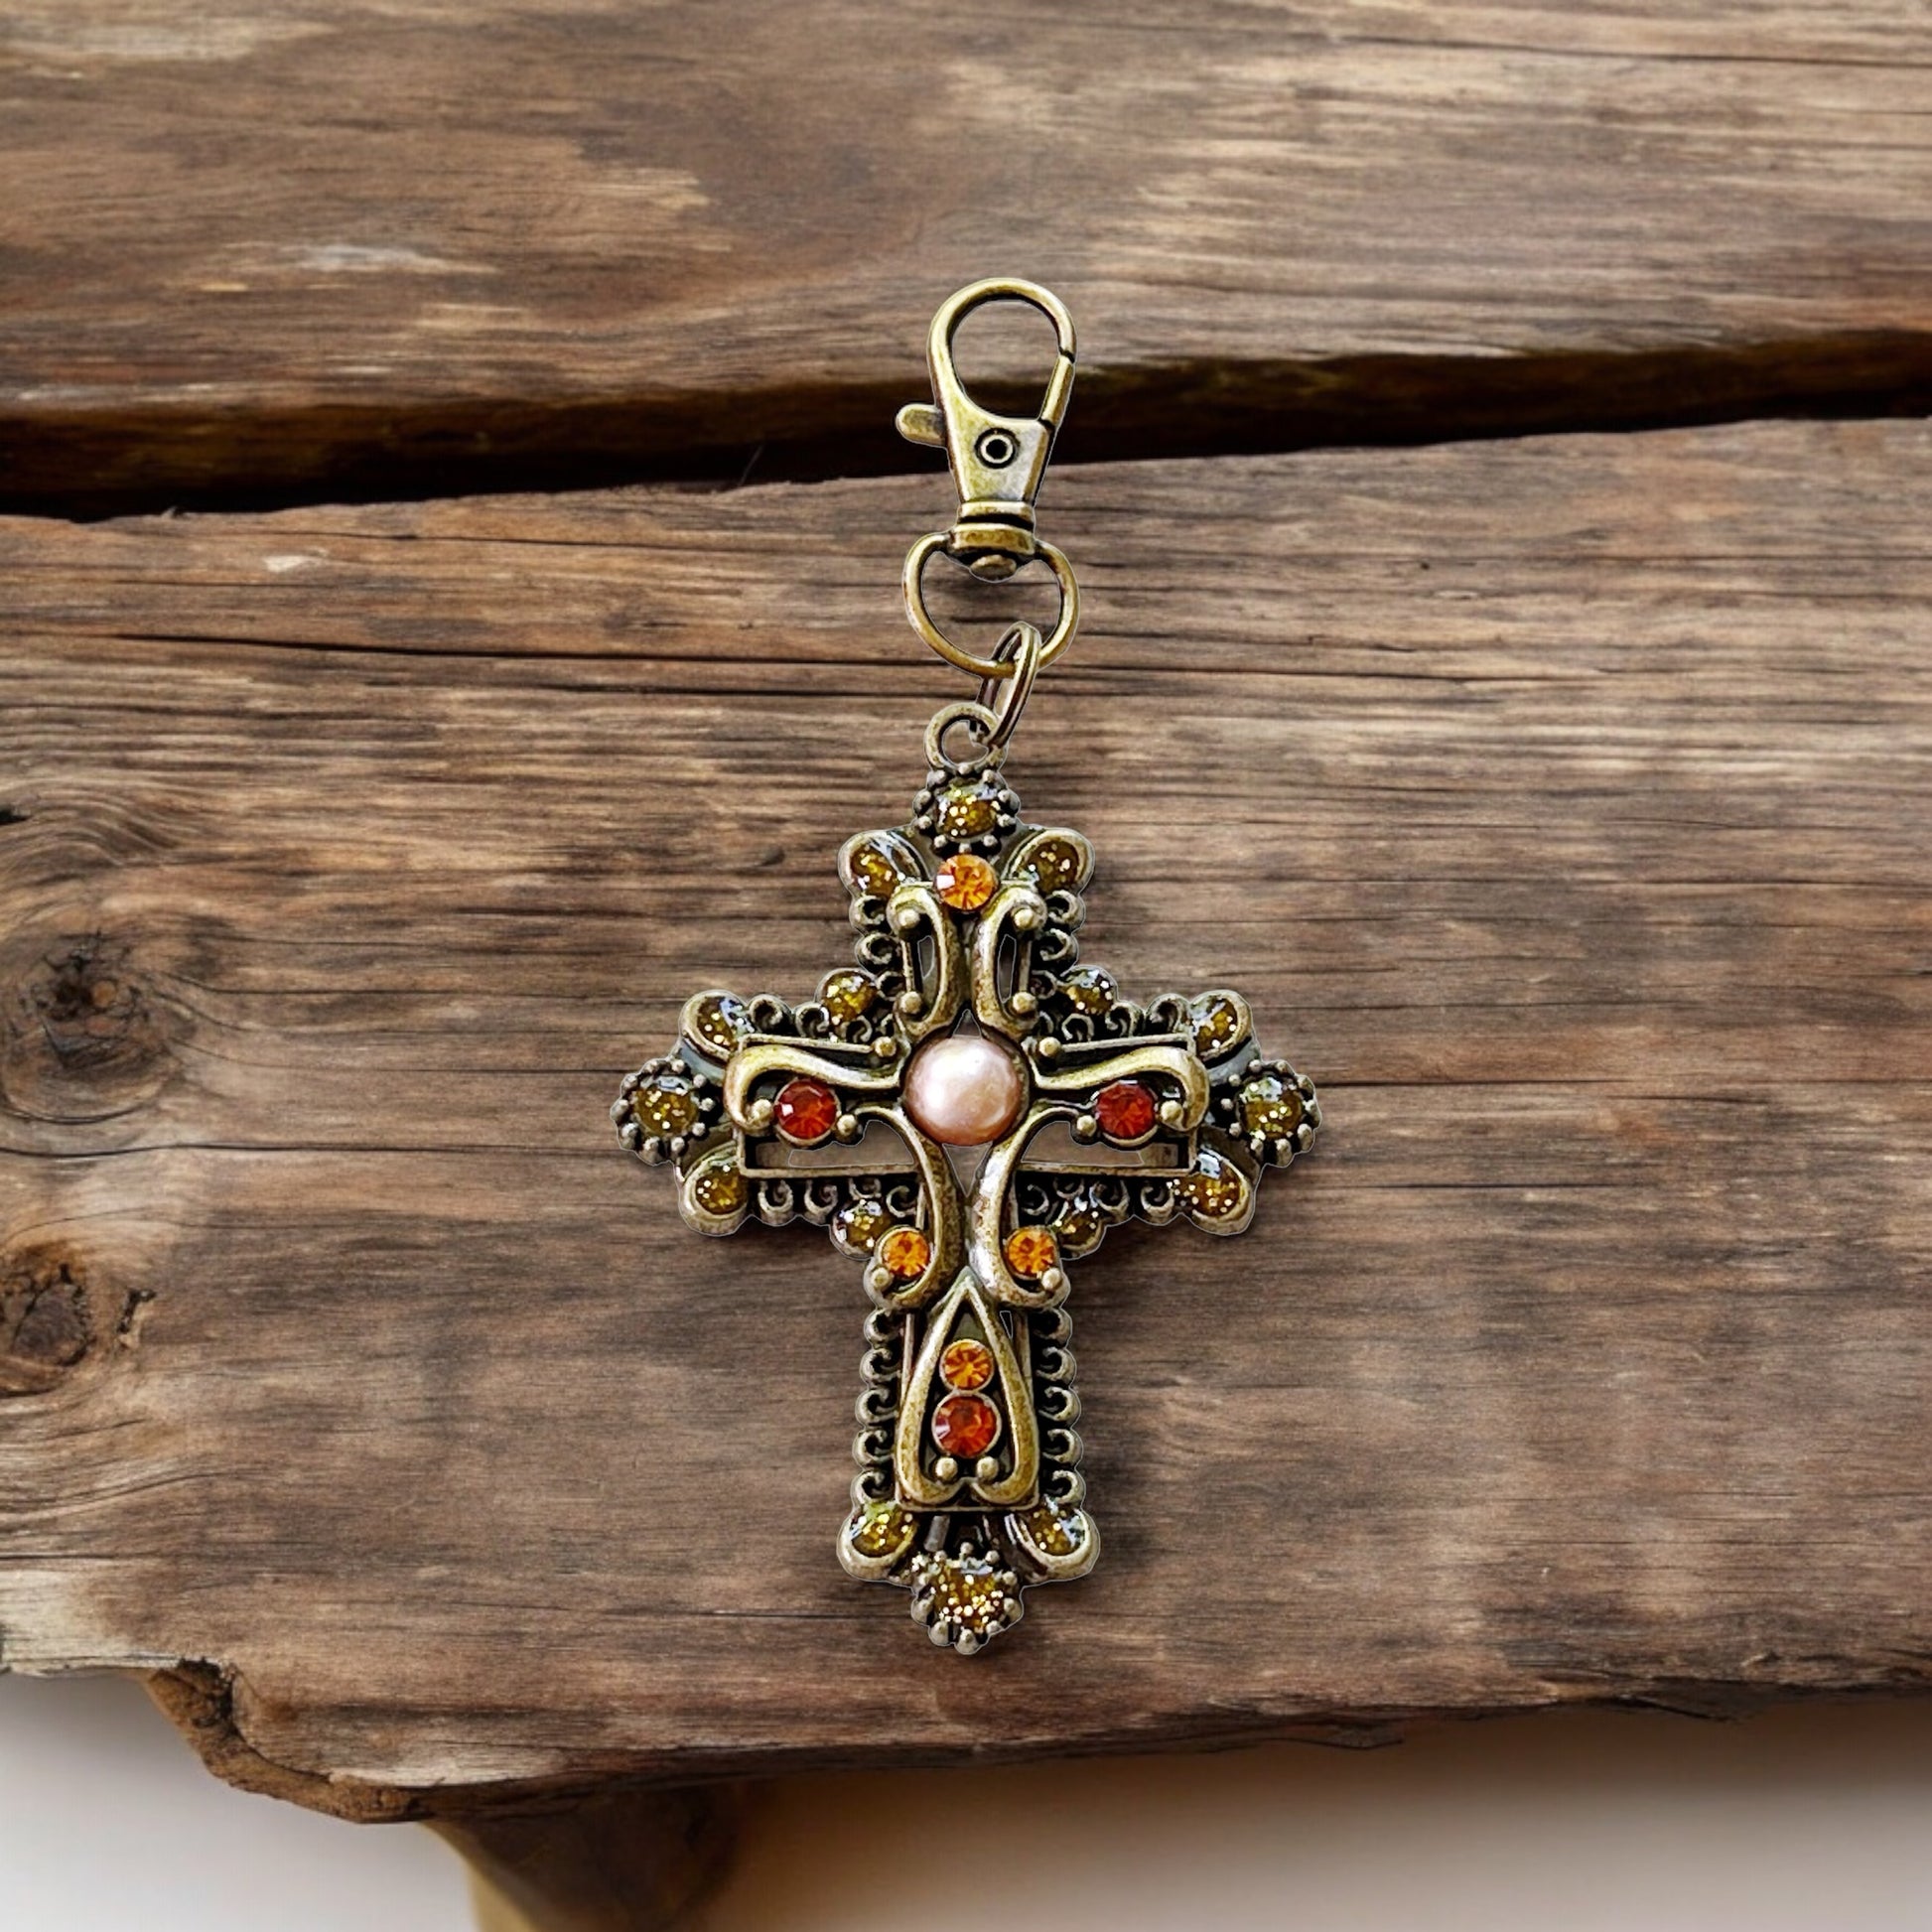 Ornate Western Brass Cross Rhinestone Handbag Charm - Stylish Elegant Accessory